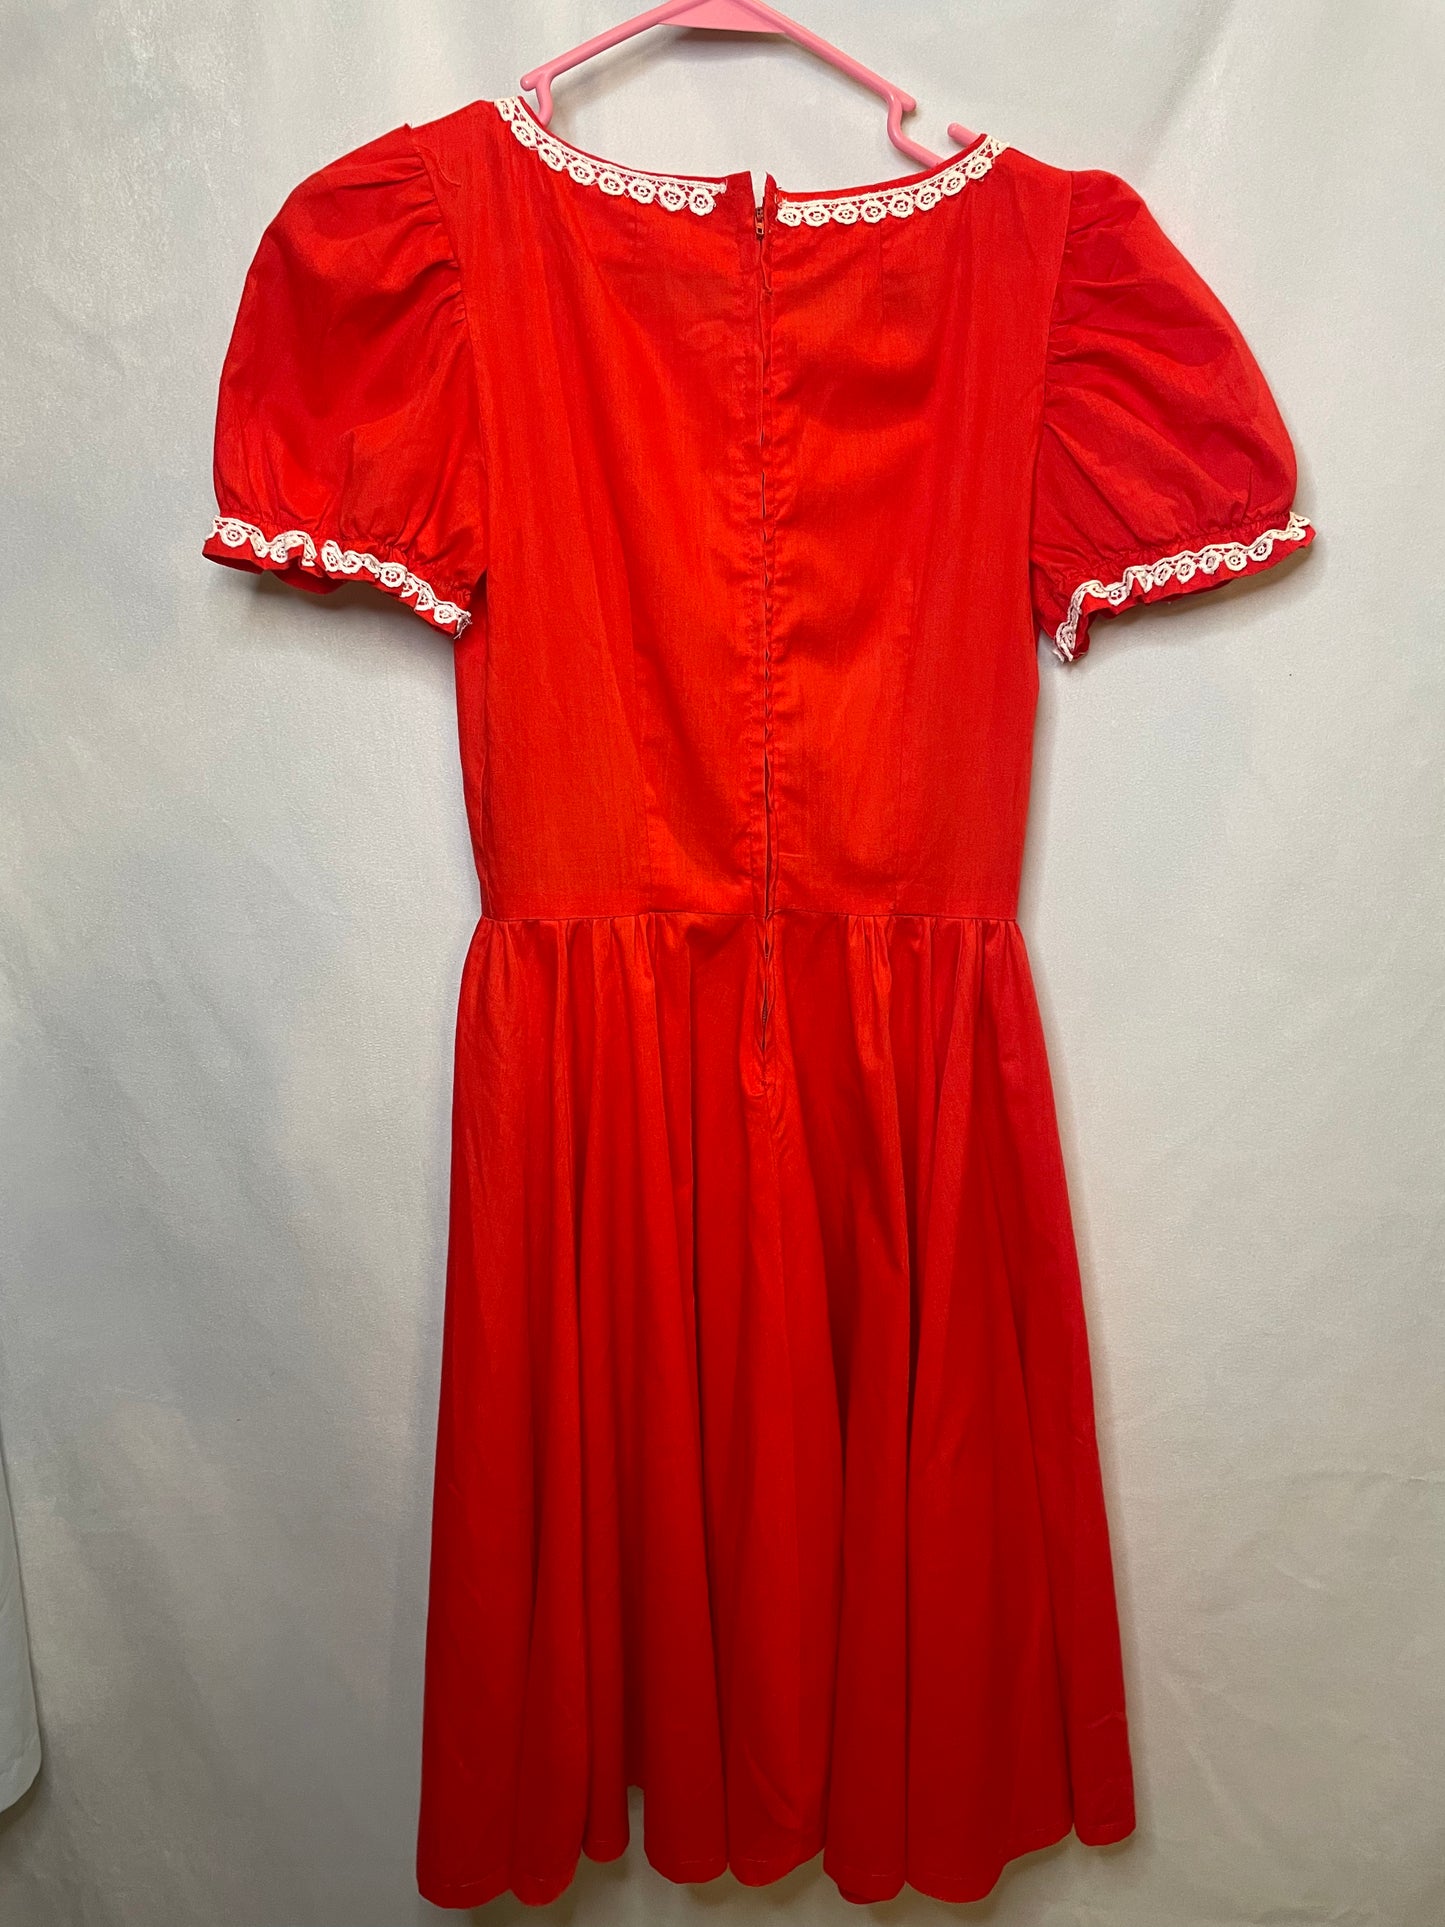 Vintage 1950s Red Swing Dress